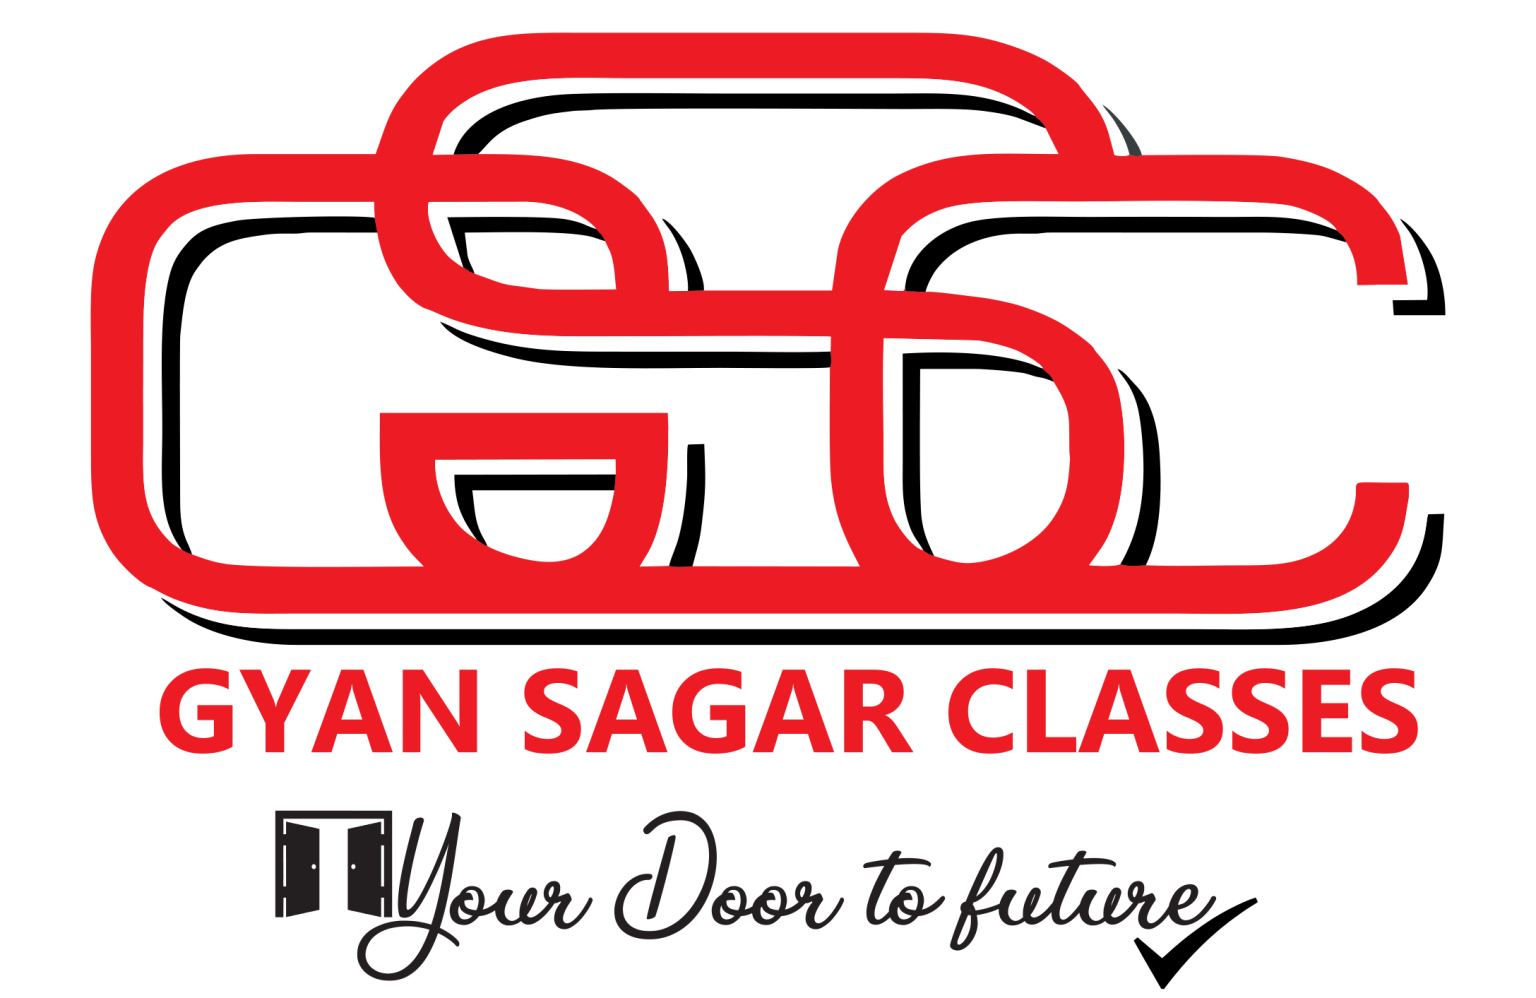 GSC (Gyan Sagar Classes) Logo